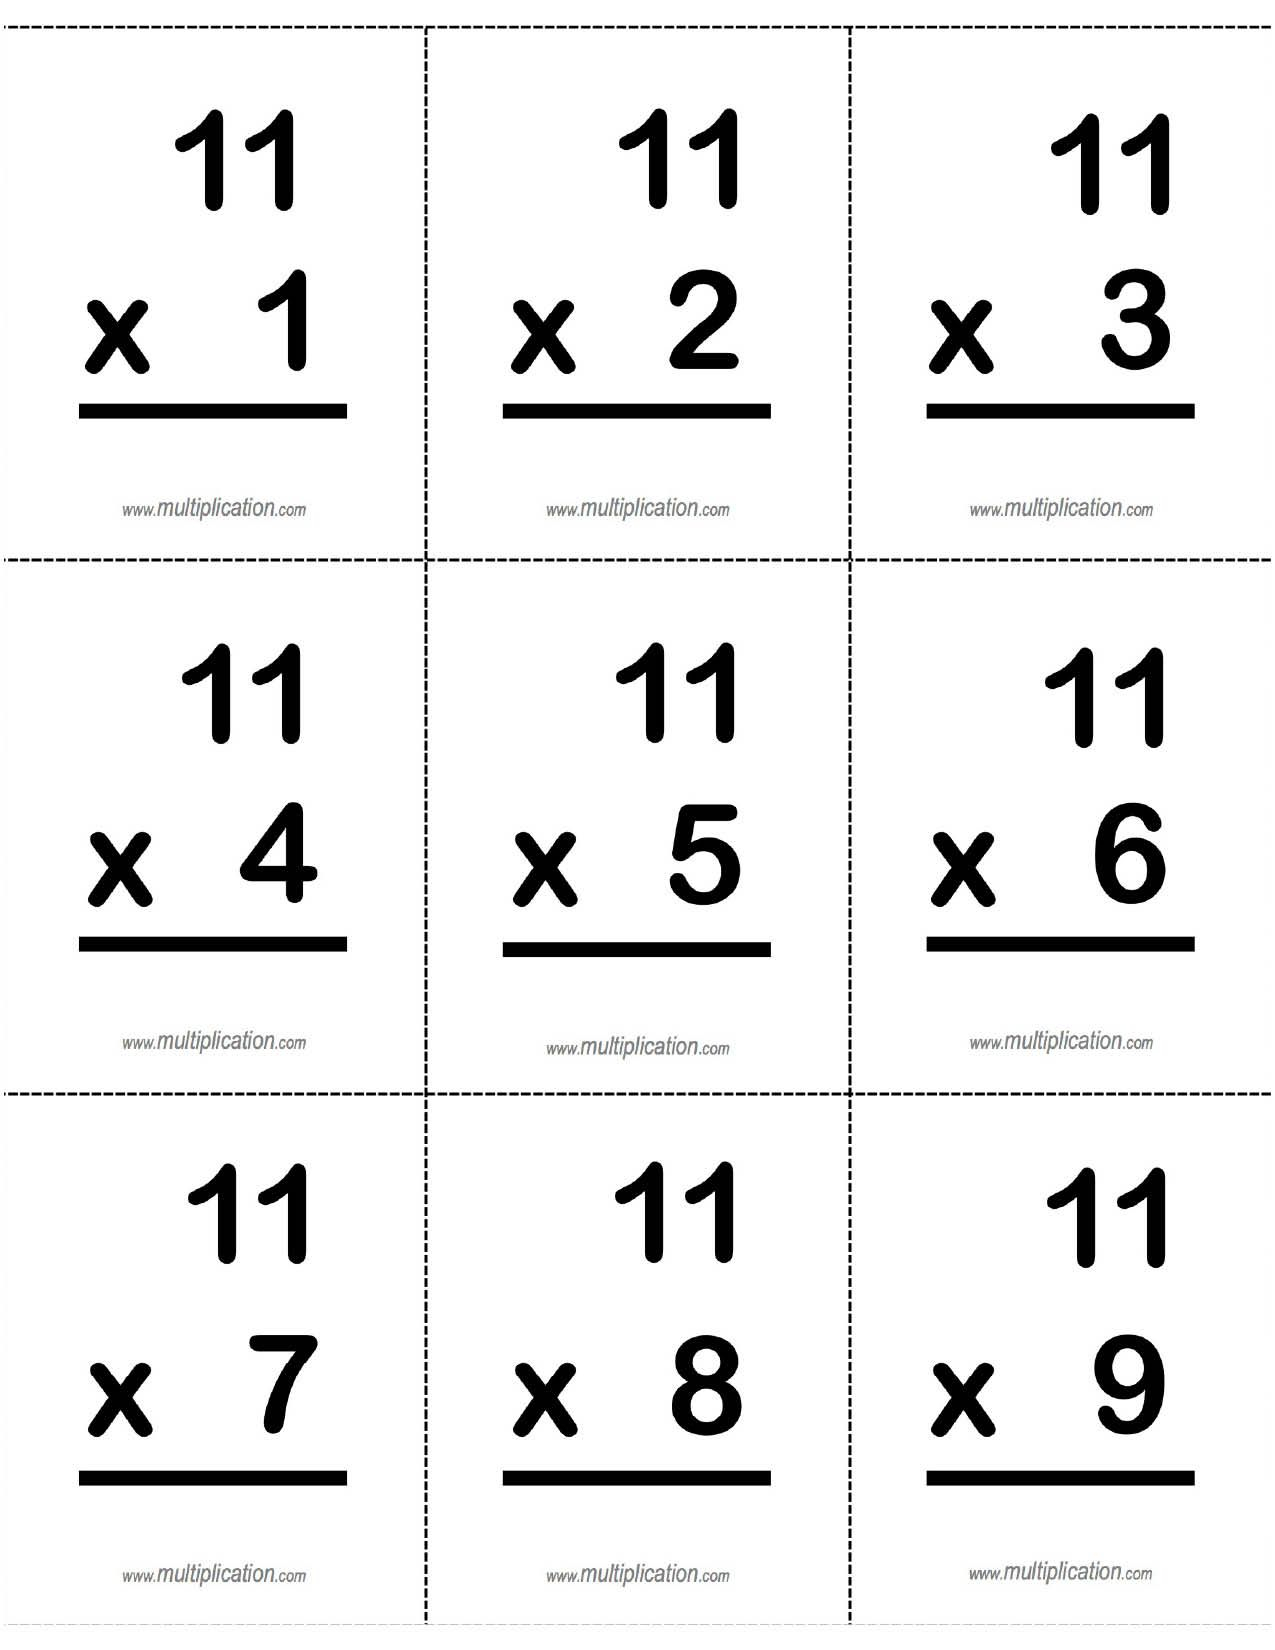 free-multiplication-flash-cards-printable-printable-world-holiday